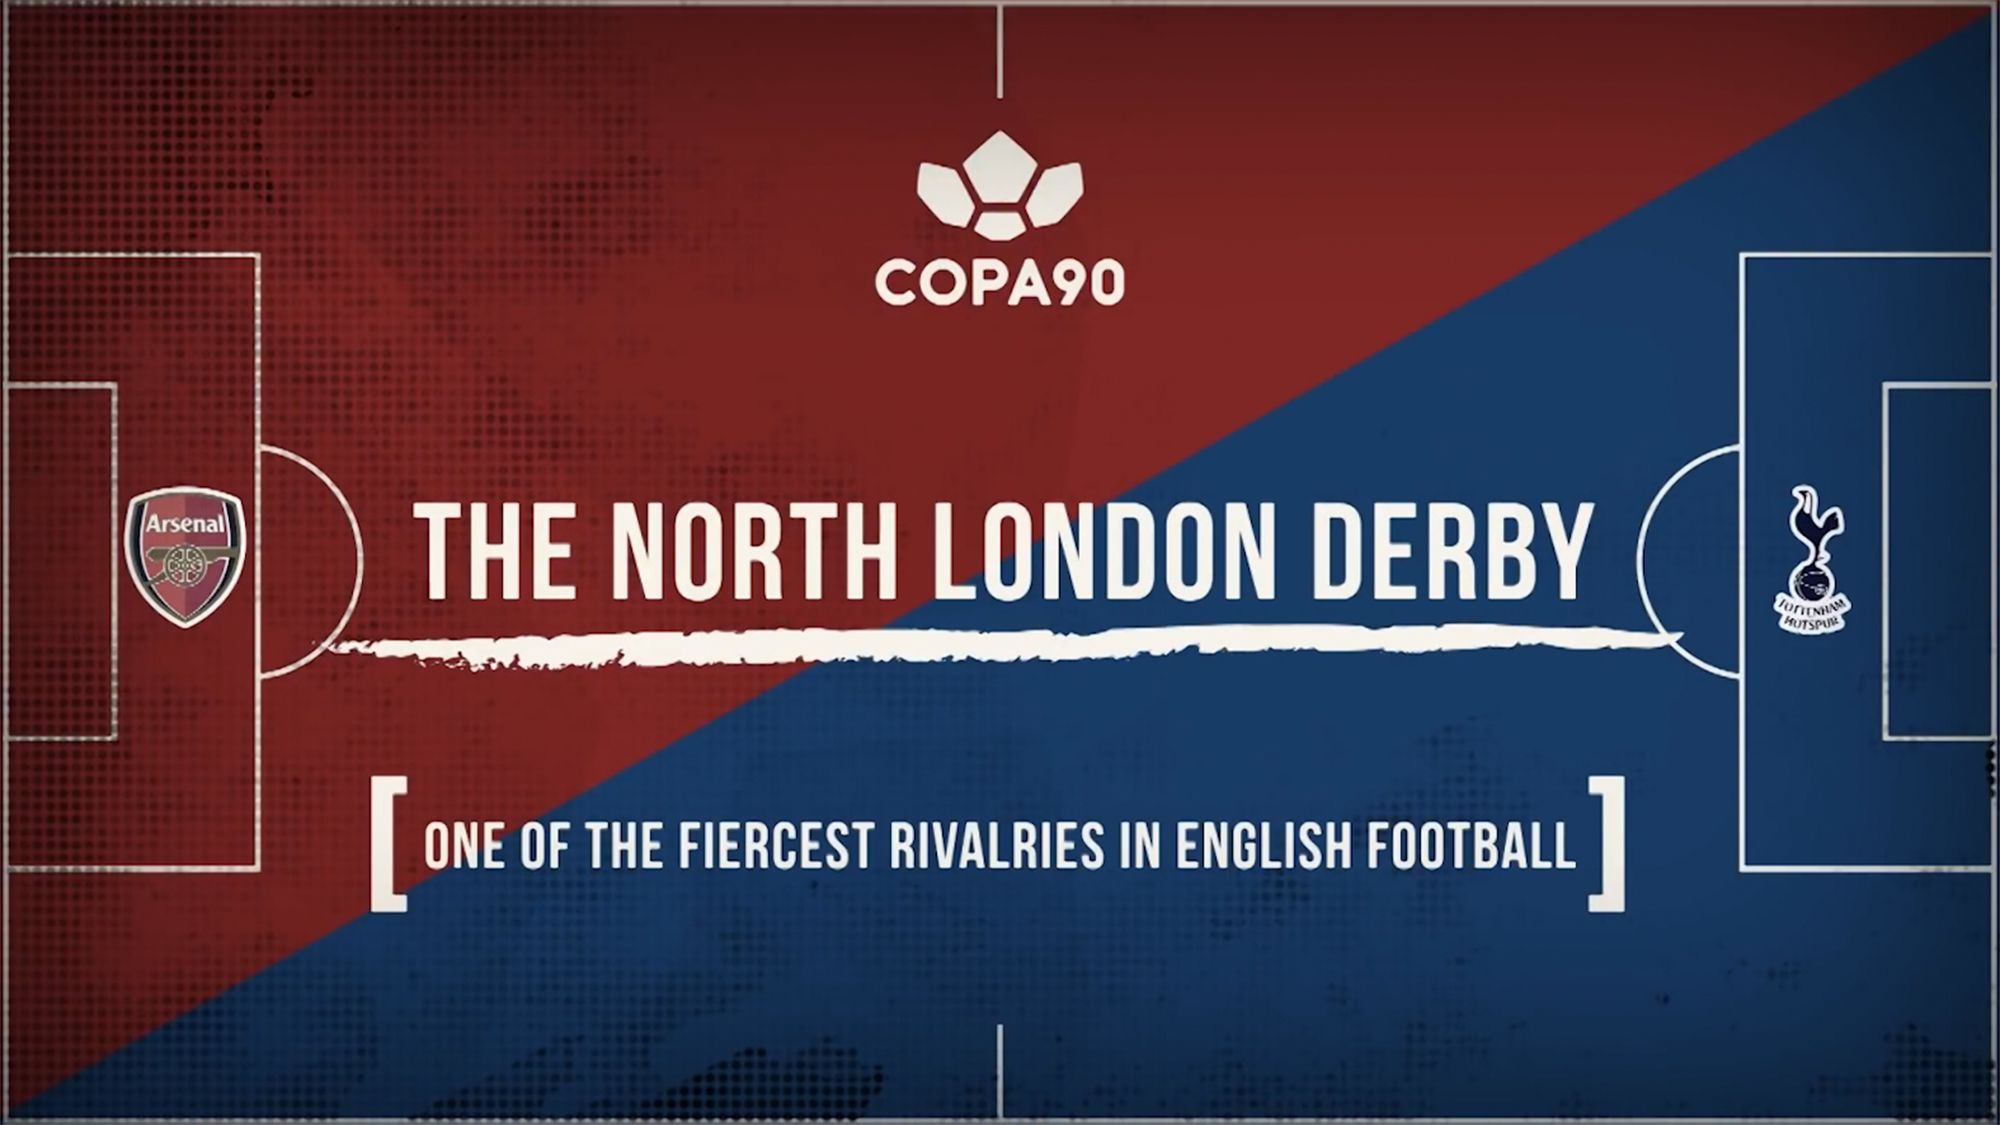 North London derby - Wikipedia